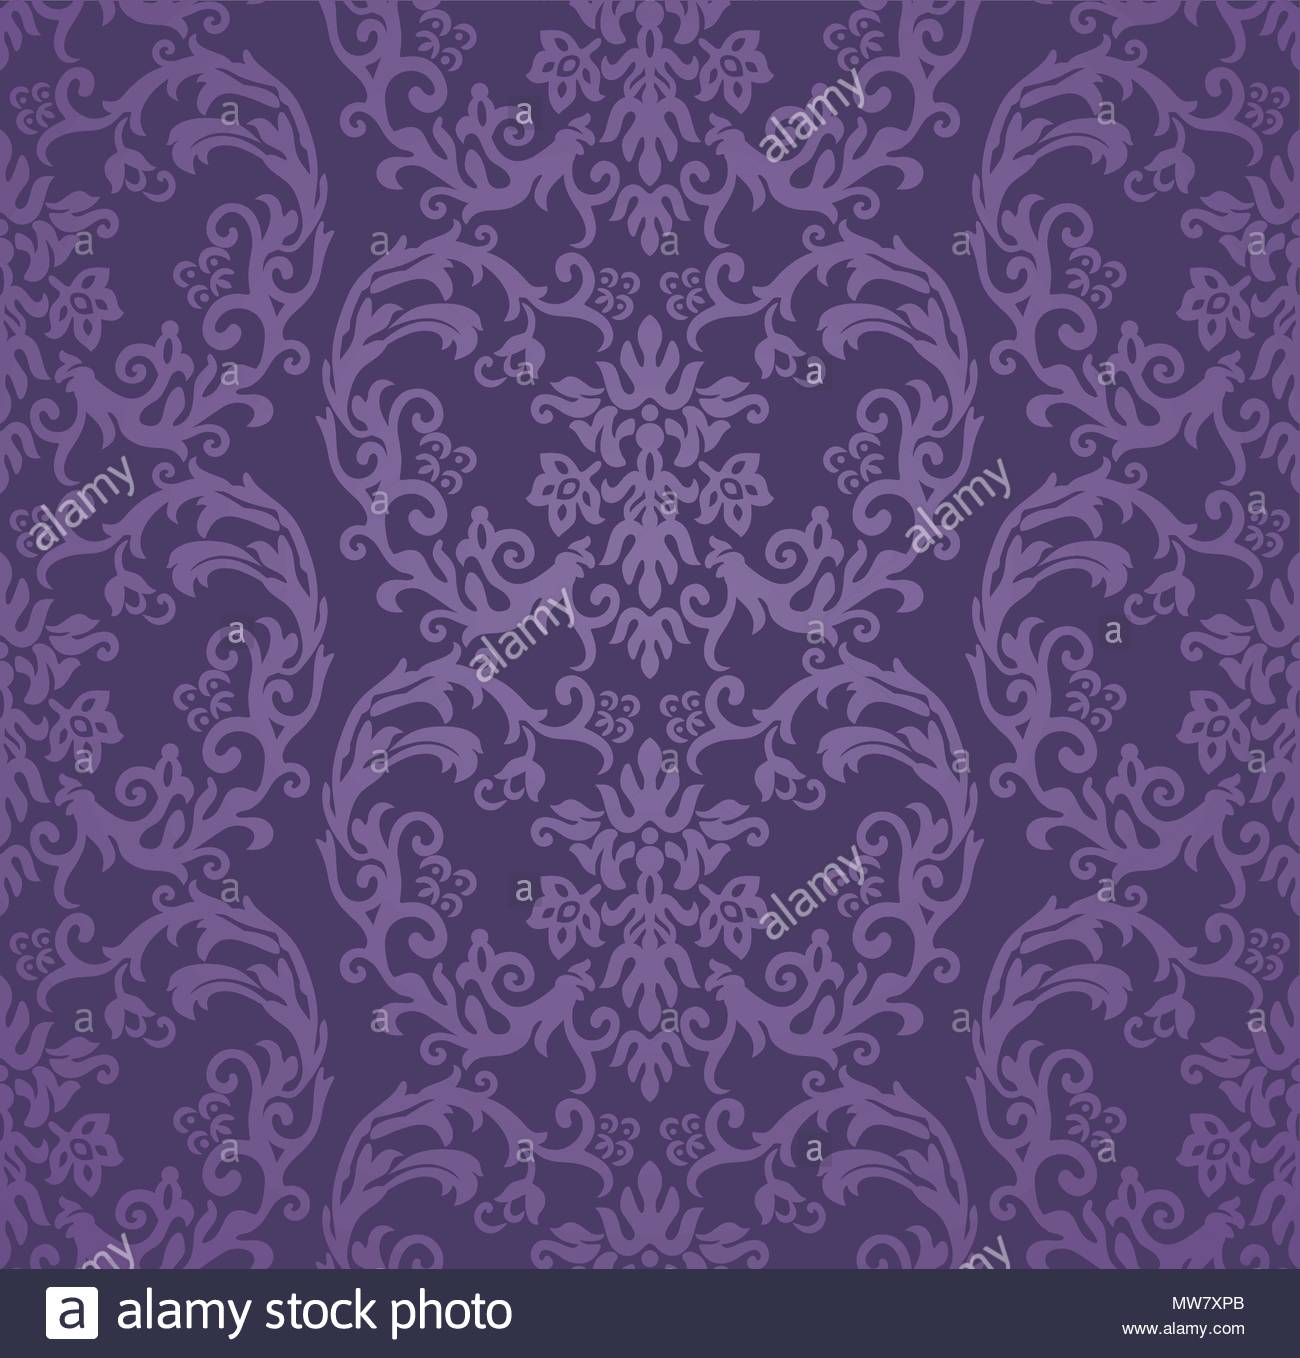 37+] Purple Damask Wallpaper - WallpaperSafari